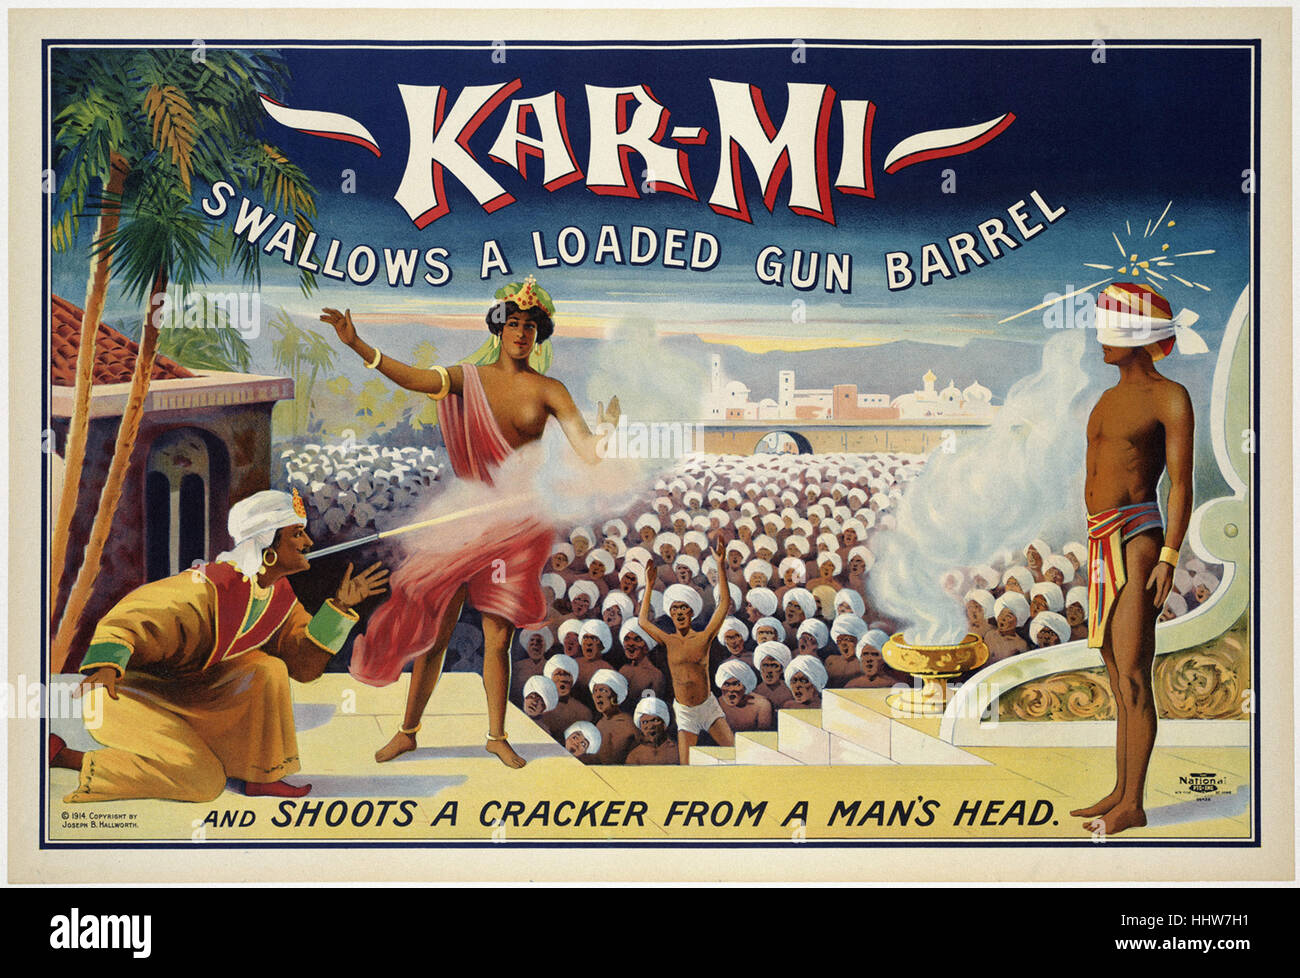 Kar-mi swallows a loaded gun barrel    and shoots a cracker from a man's head.  - Magic Posters Stock Photo